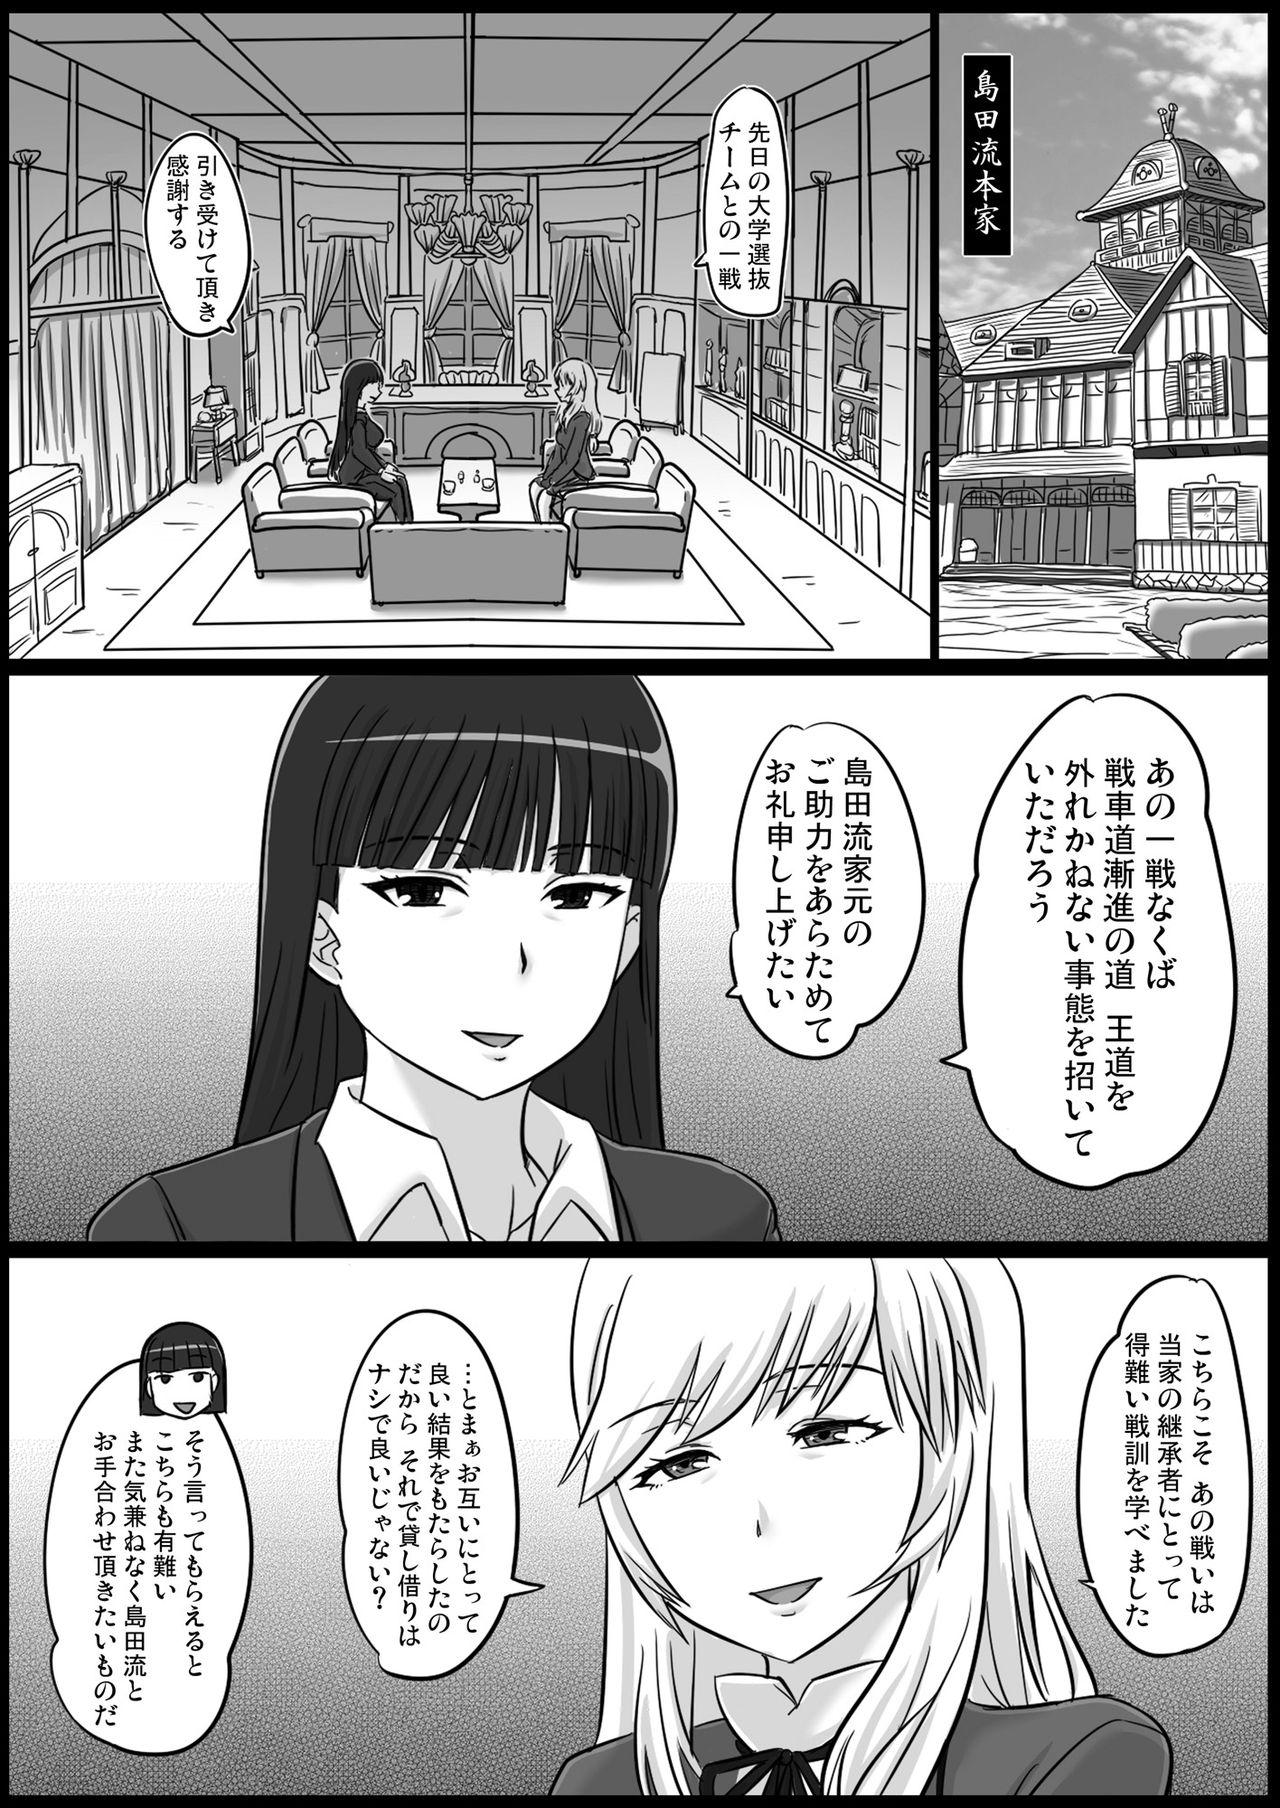 Punish Okinai Iemoto - Girls und panzer Job - Page 2